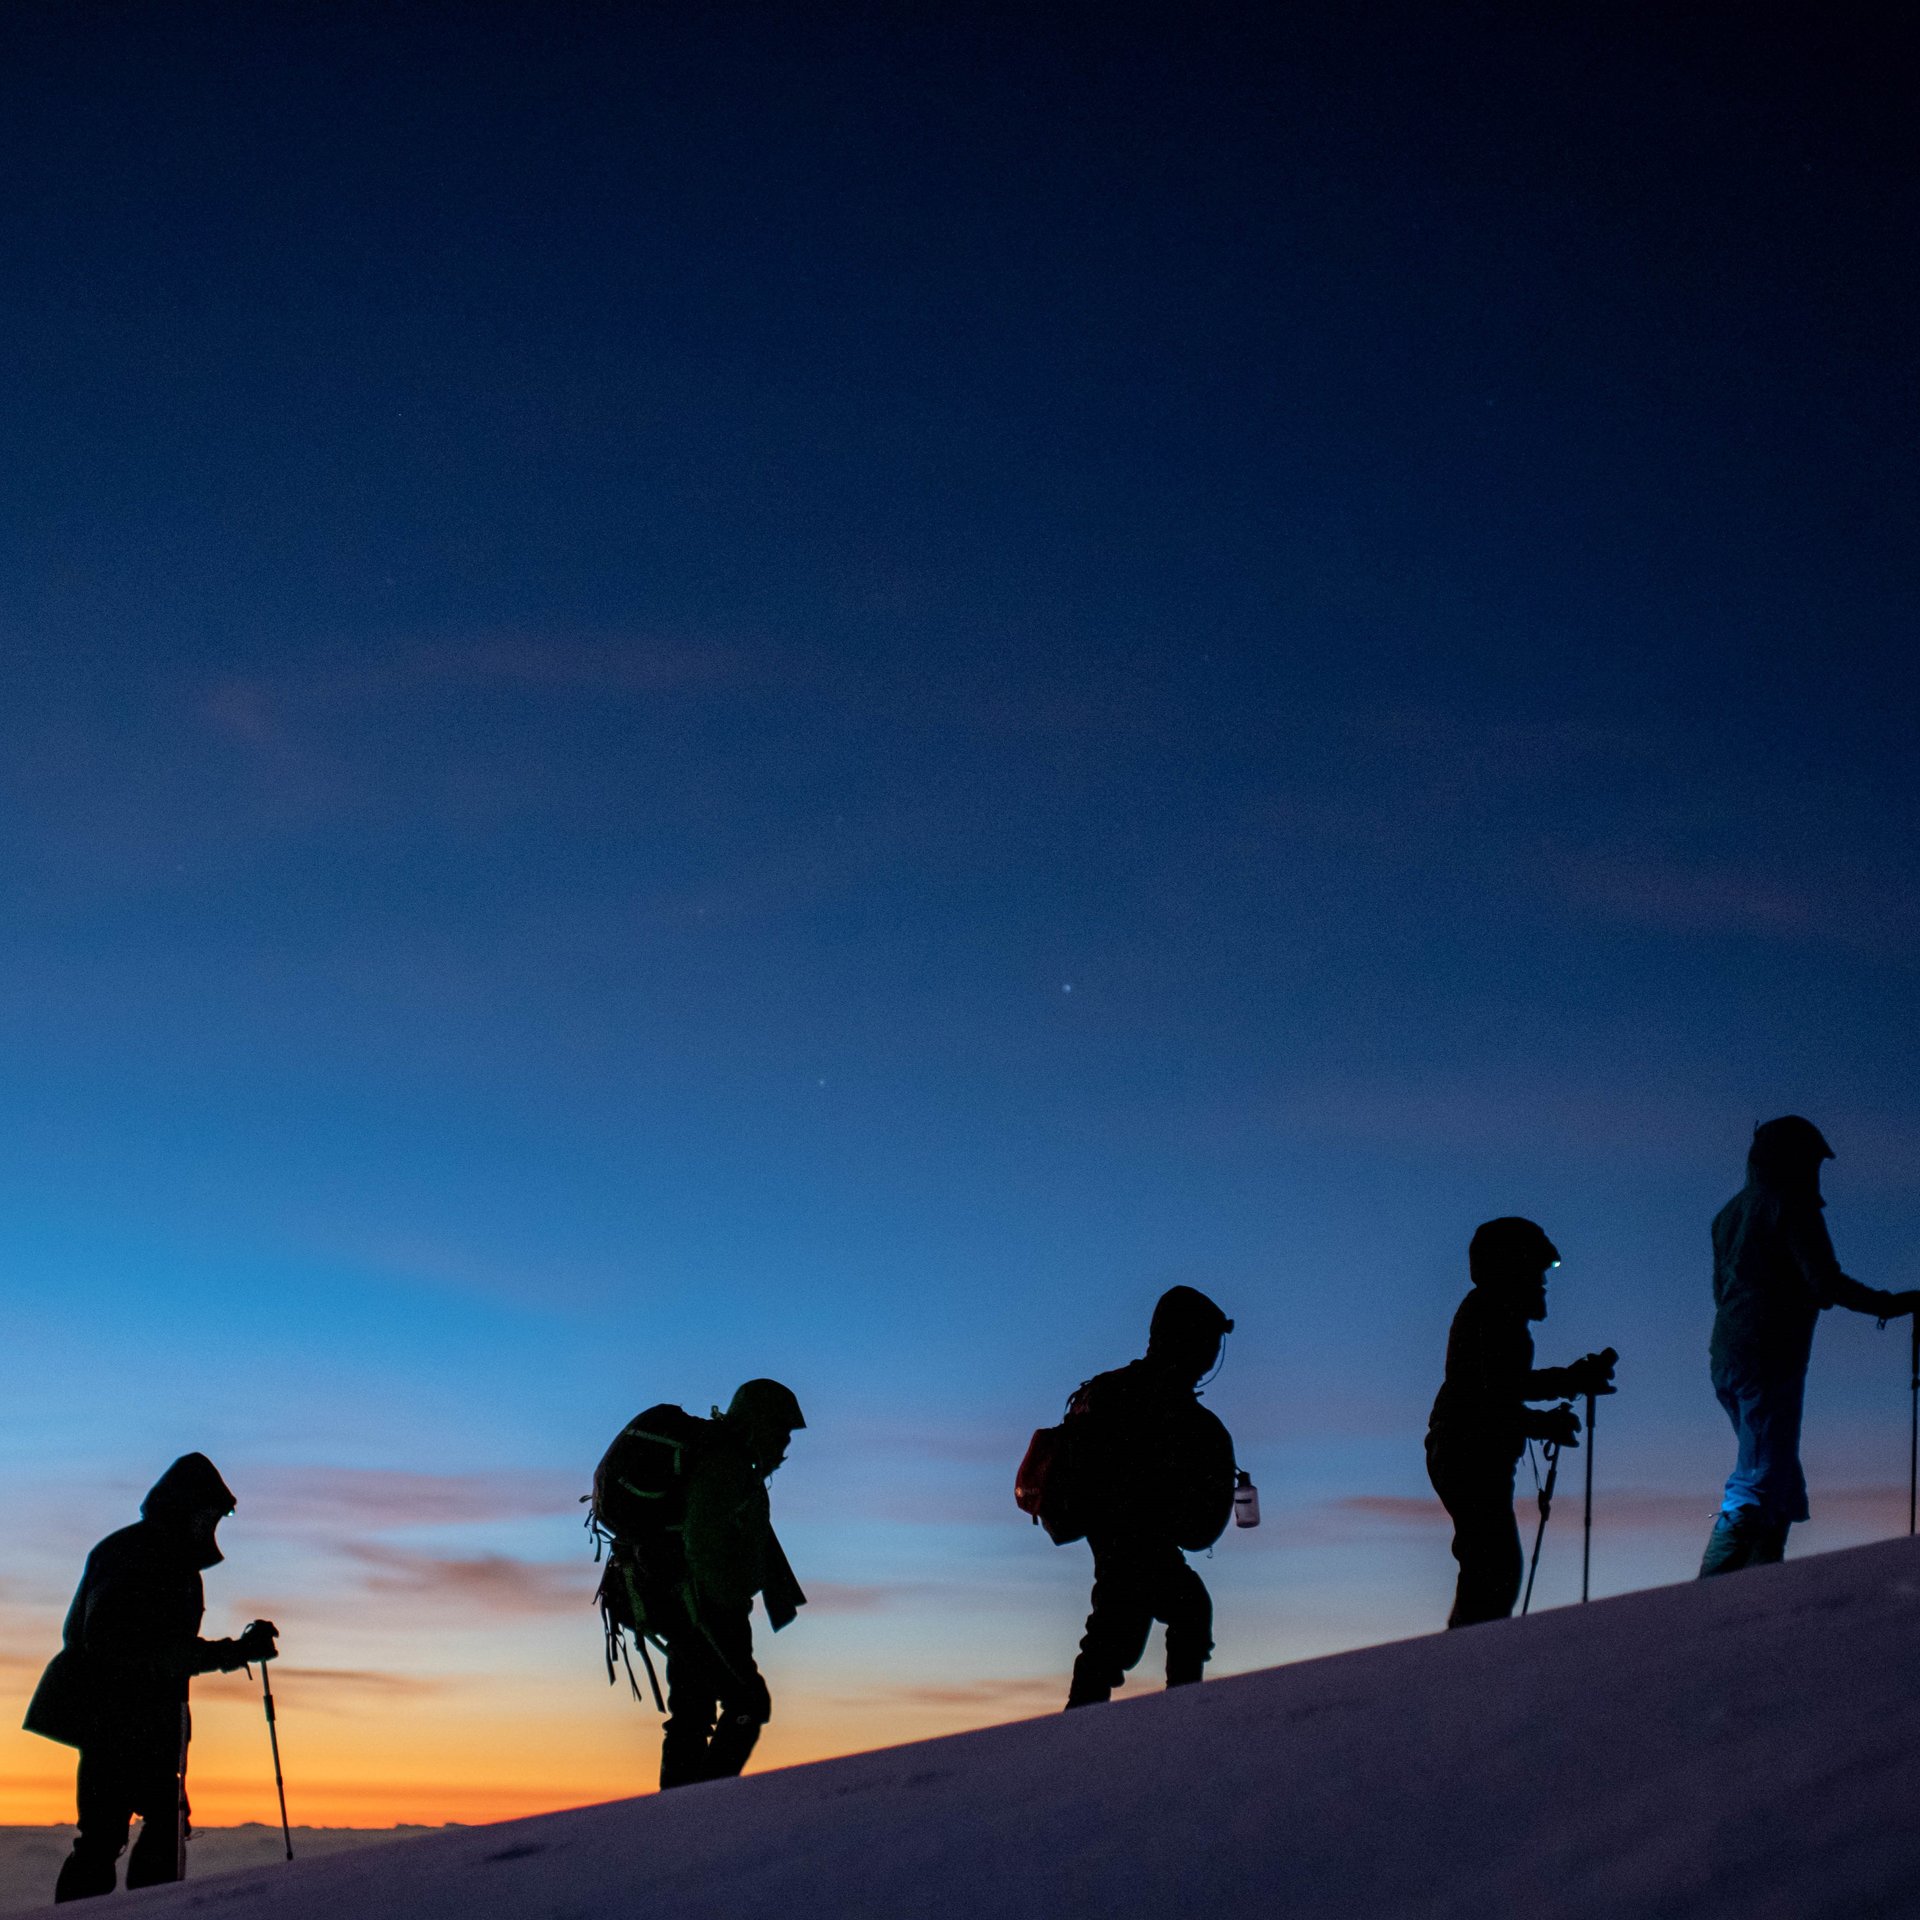 Mount Kilimanjaro - hiking for a sunrise